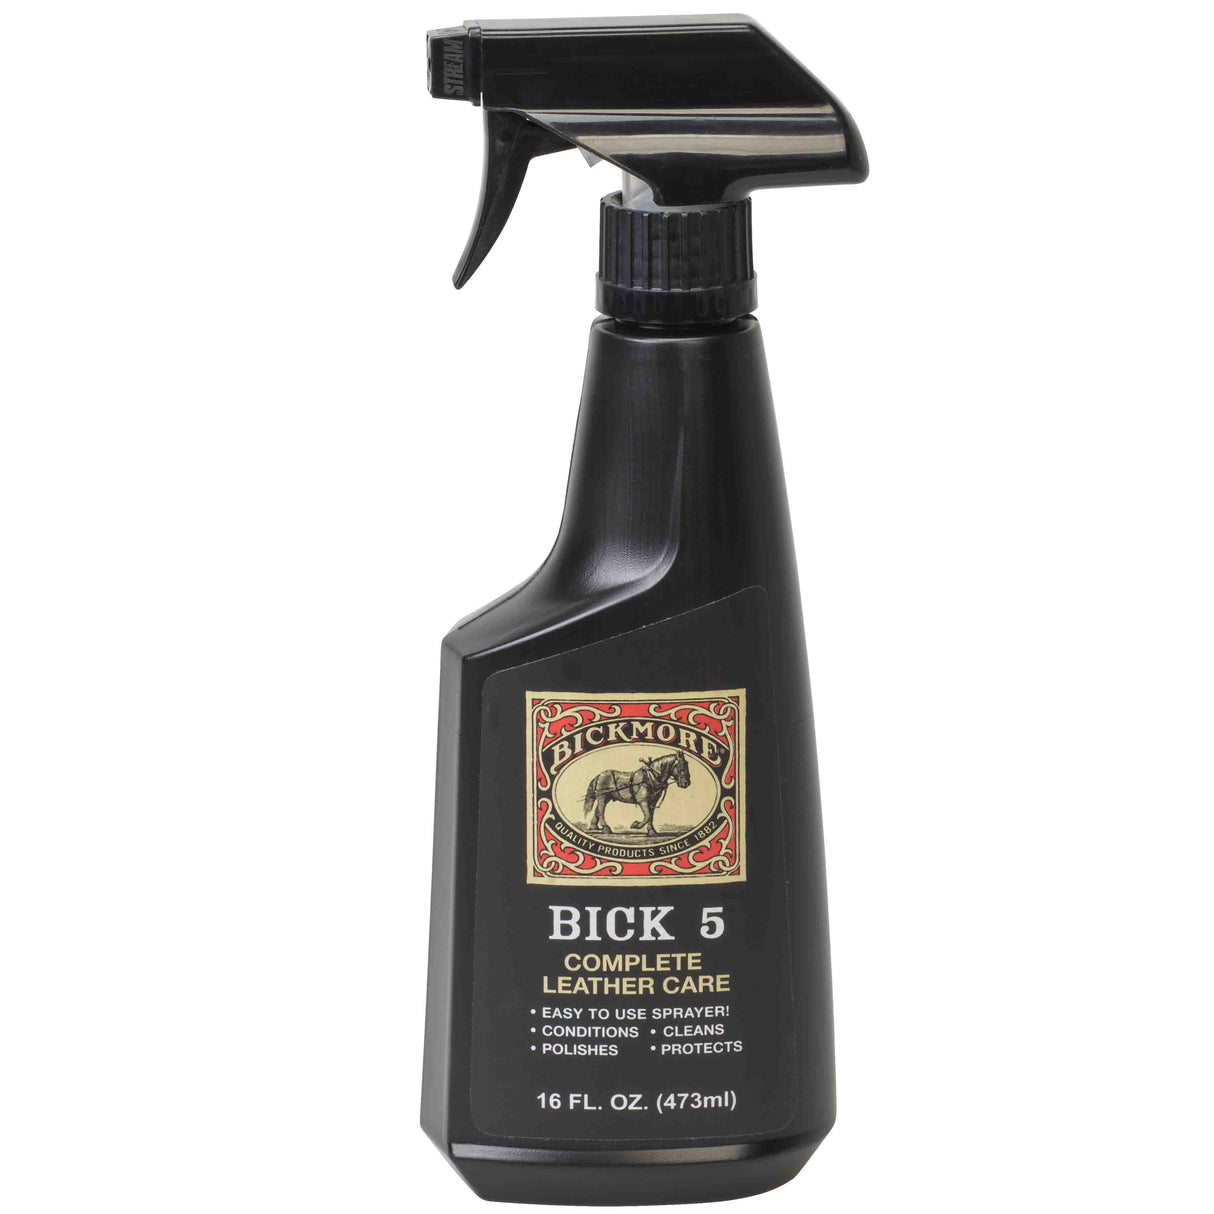 Bick 5 Complete Leather Care, 16 oz.